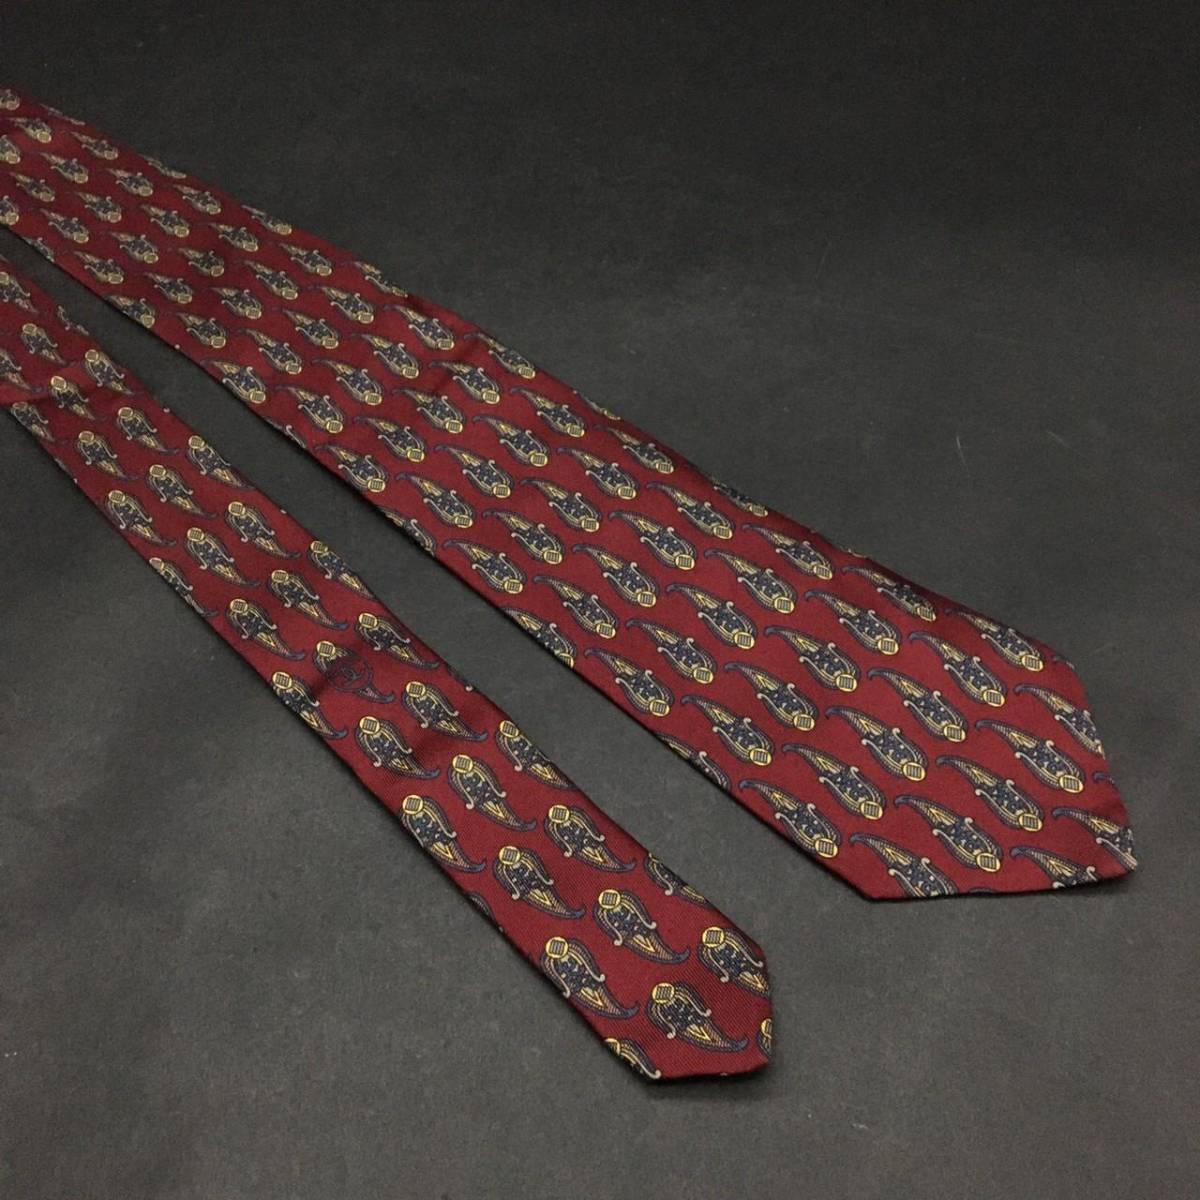 FG0704-57-7 シャネル CHANEL ネクタイ レギュラータイ 絹 シルク ペイズリー柄 赤 レッド イタリア製 60サイズ_画像2